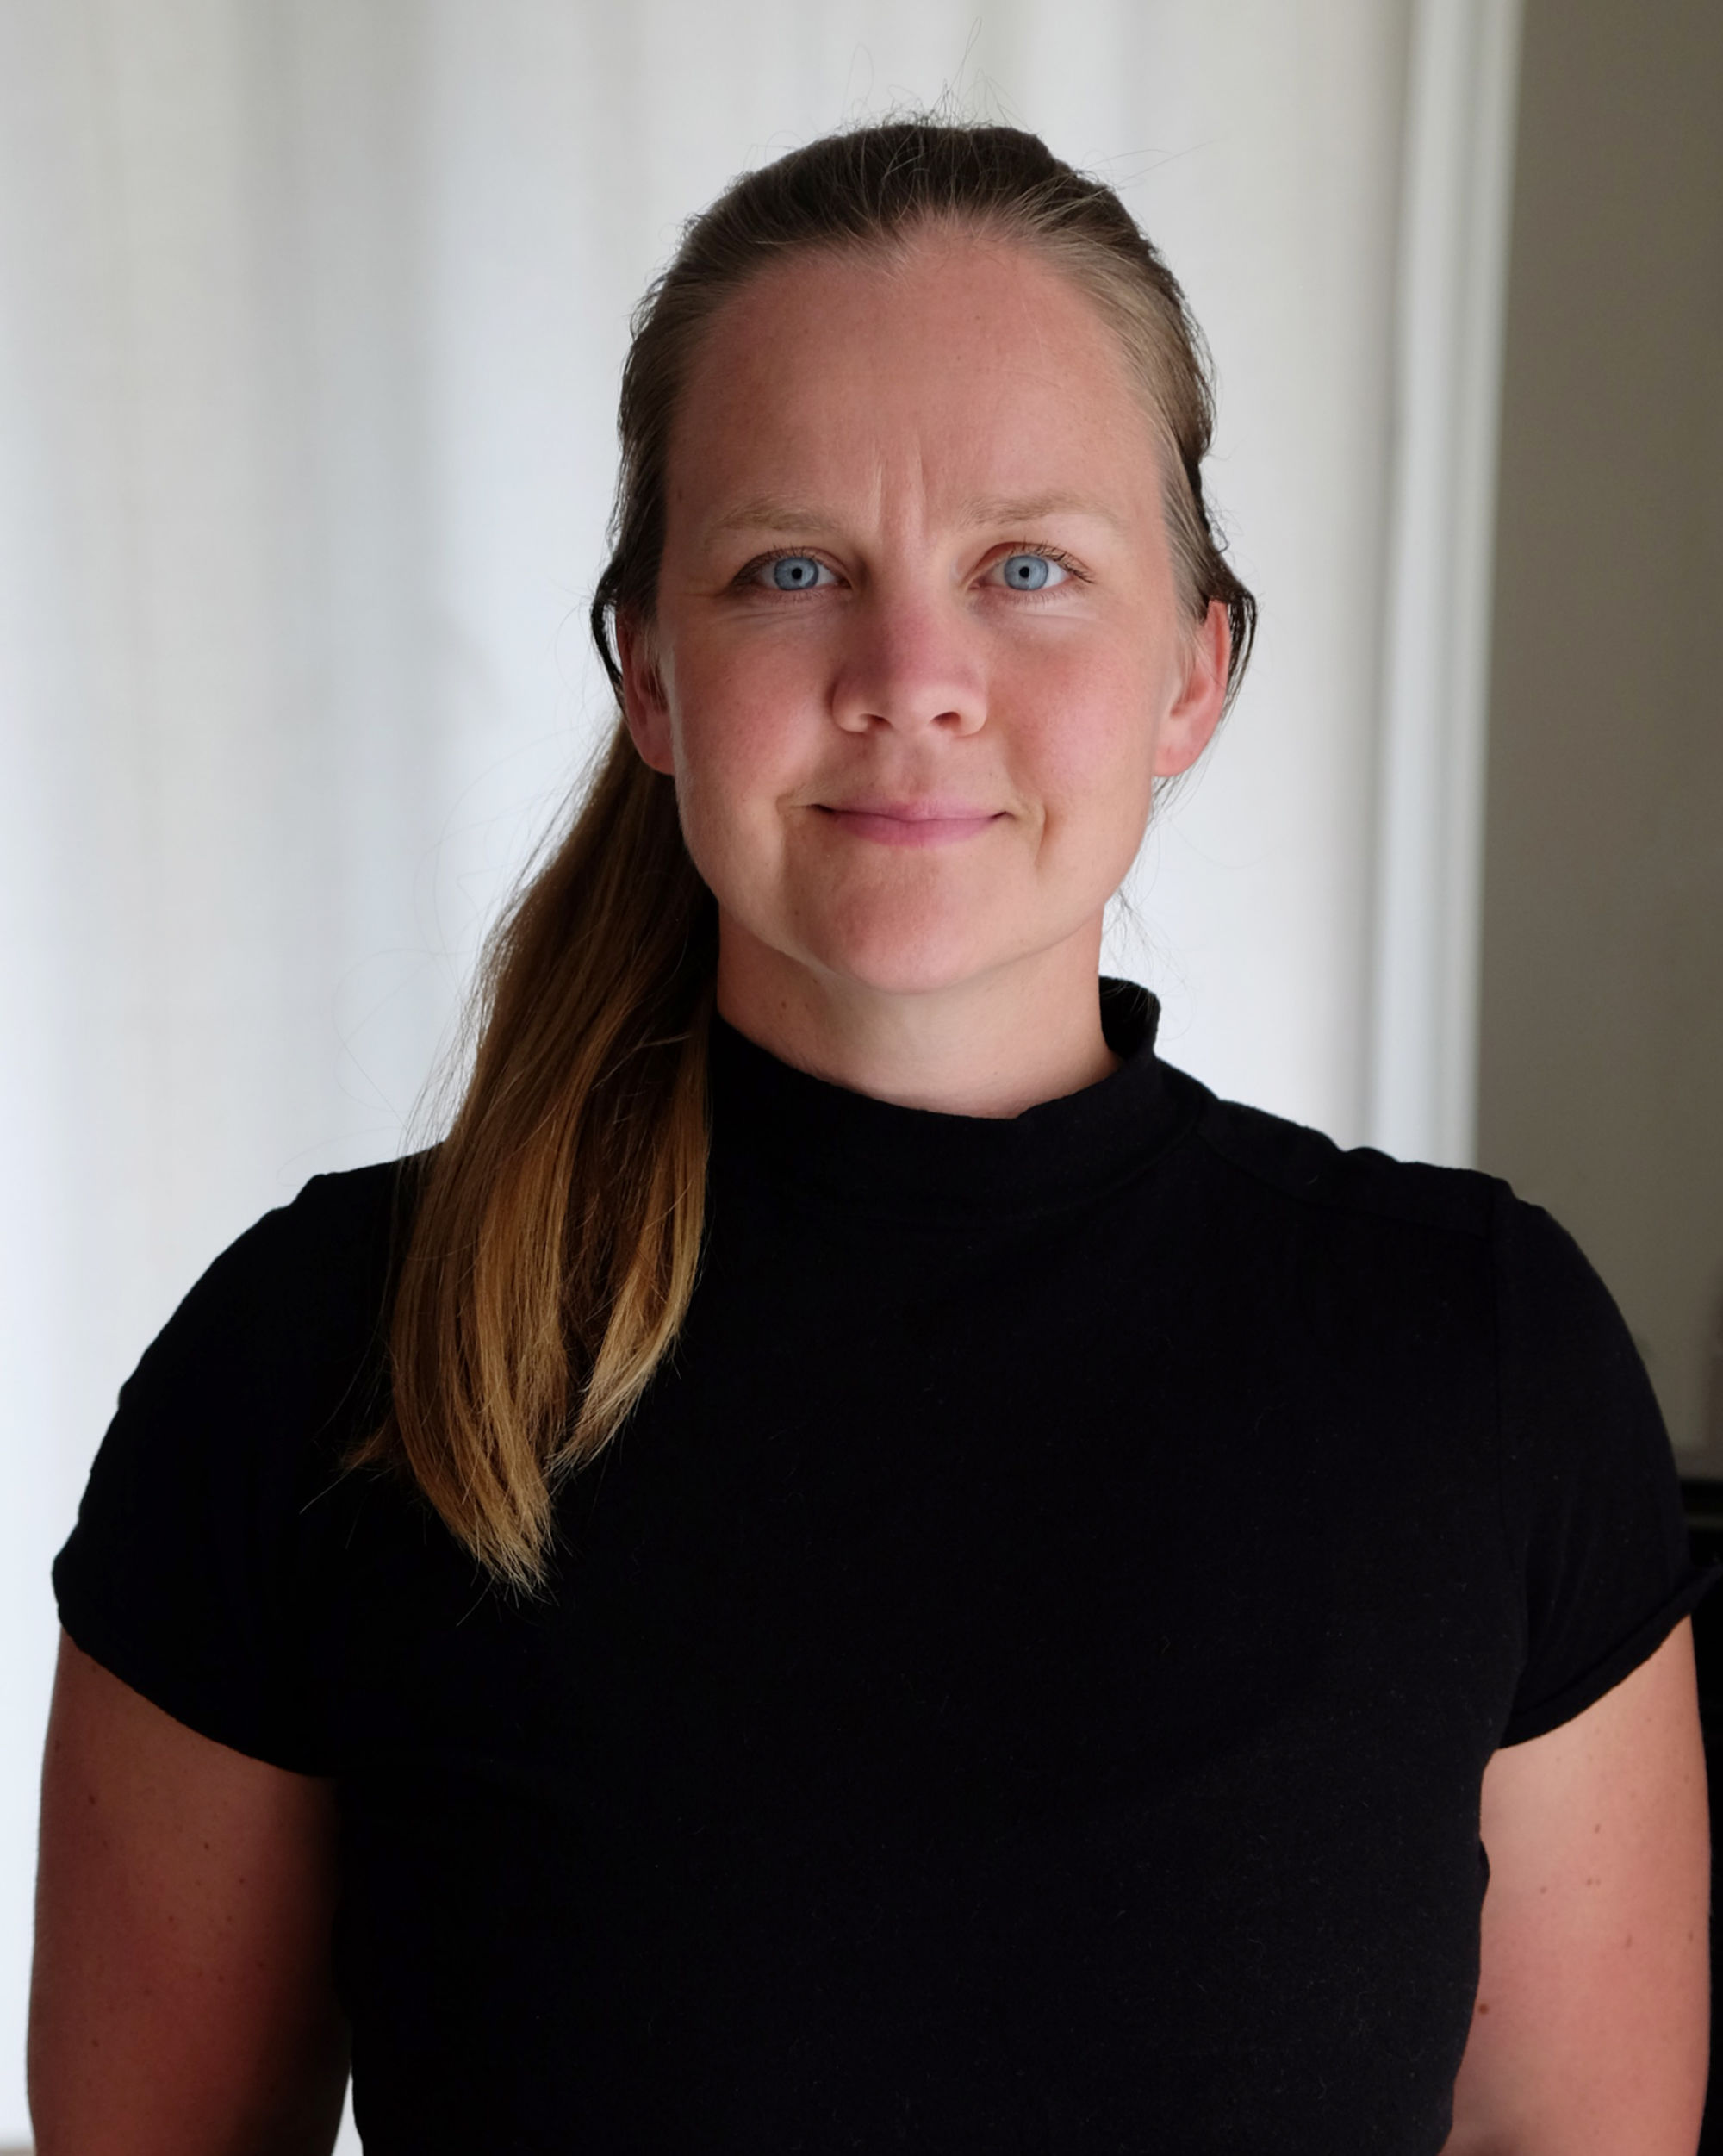 Meet Dr. Kristin Haraldsdottir - Former Dir of Exercise Research